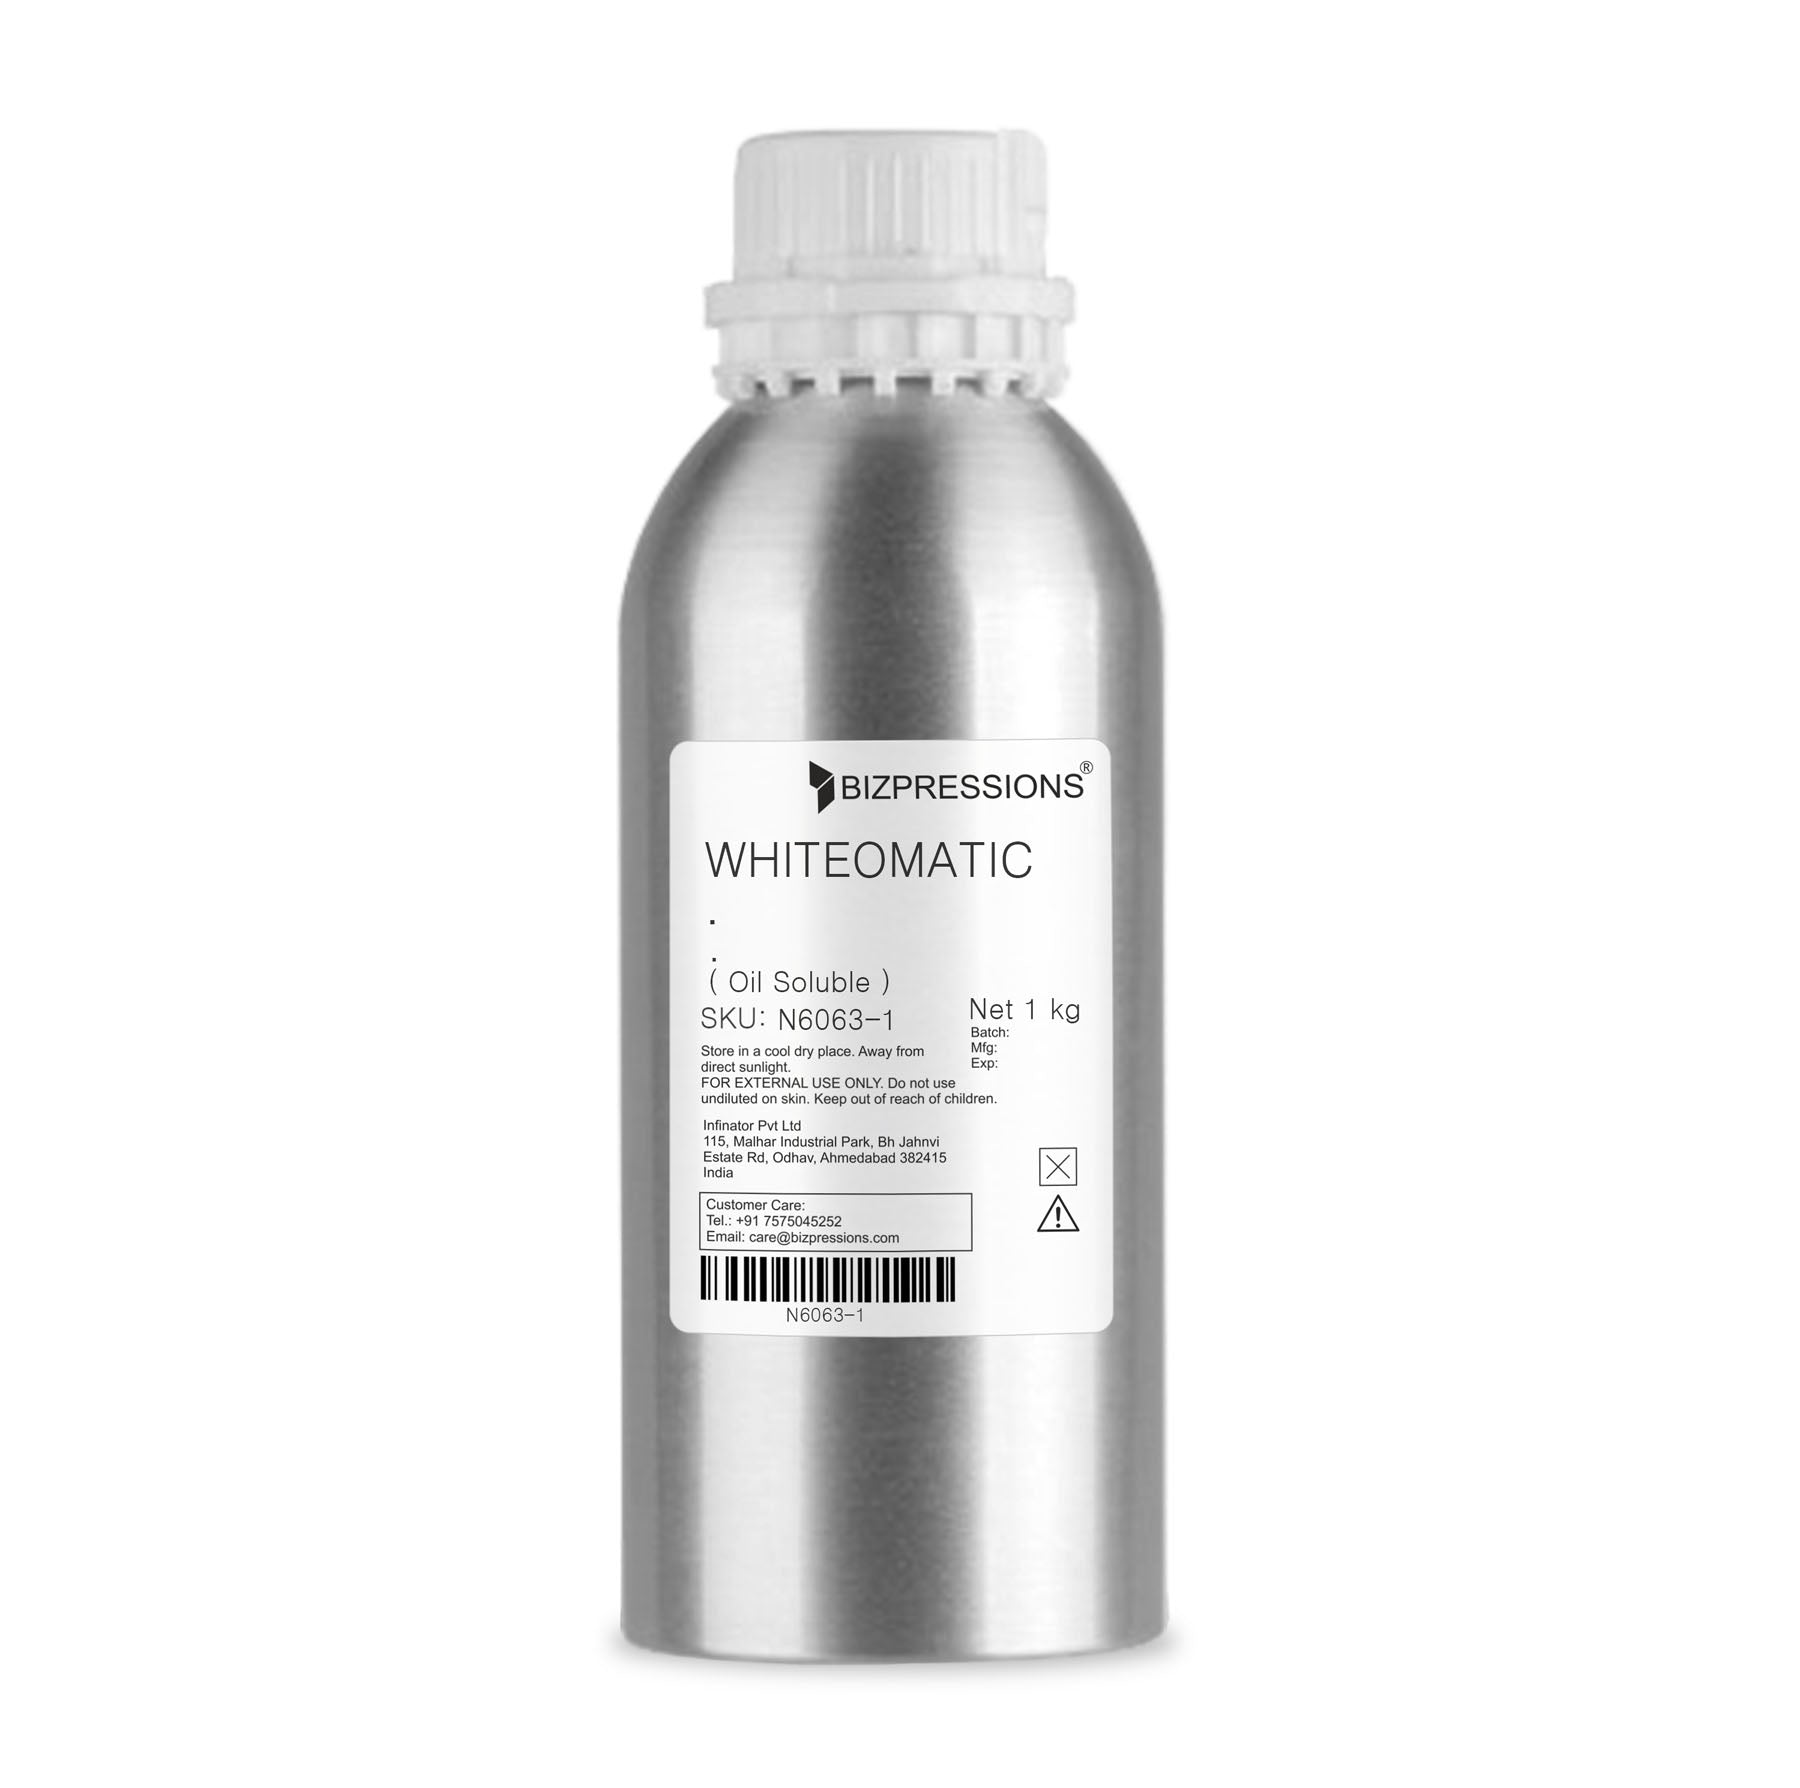 WHITEOMATIC - Fragrance ( Oil Soluble ) - 1 kg